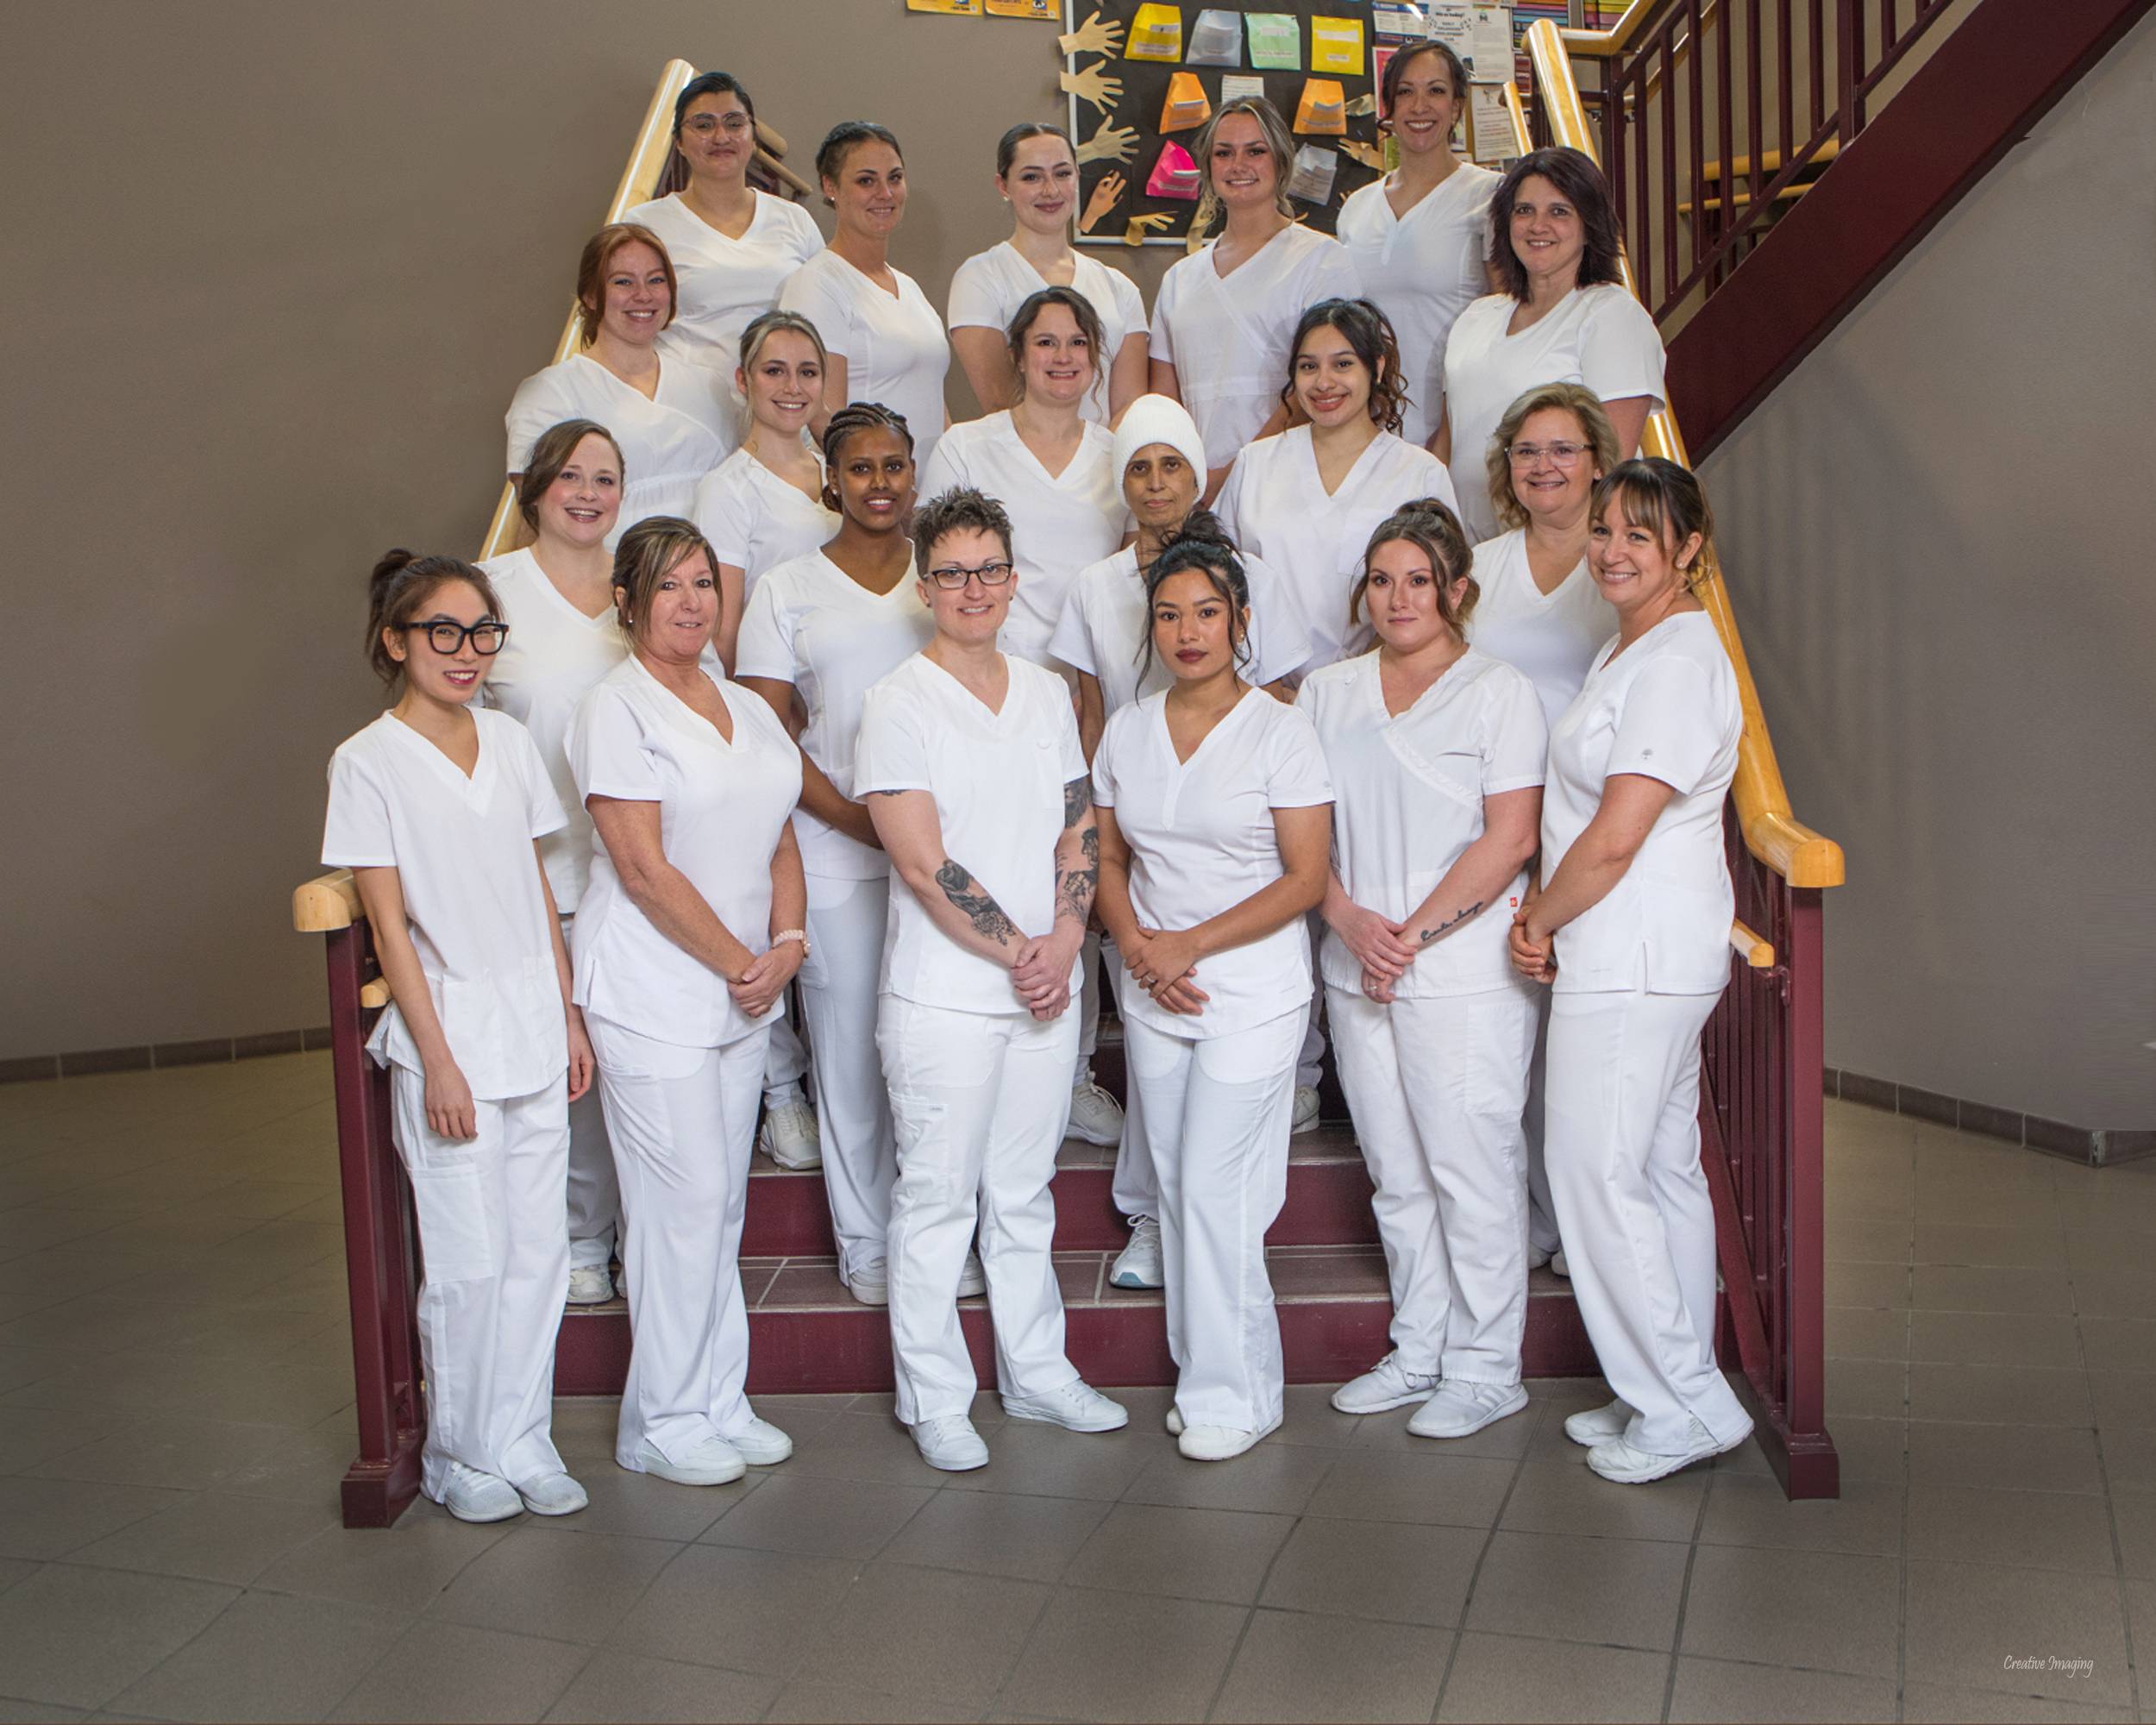 Group photo of nursing graduates